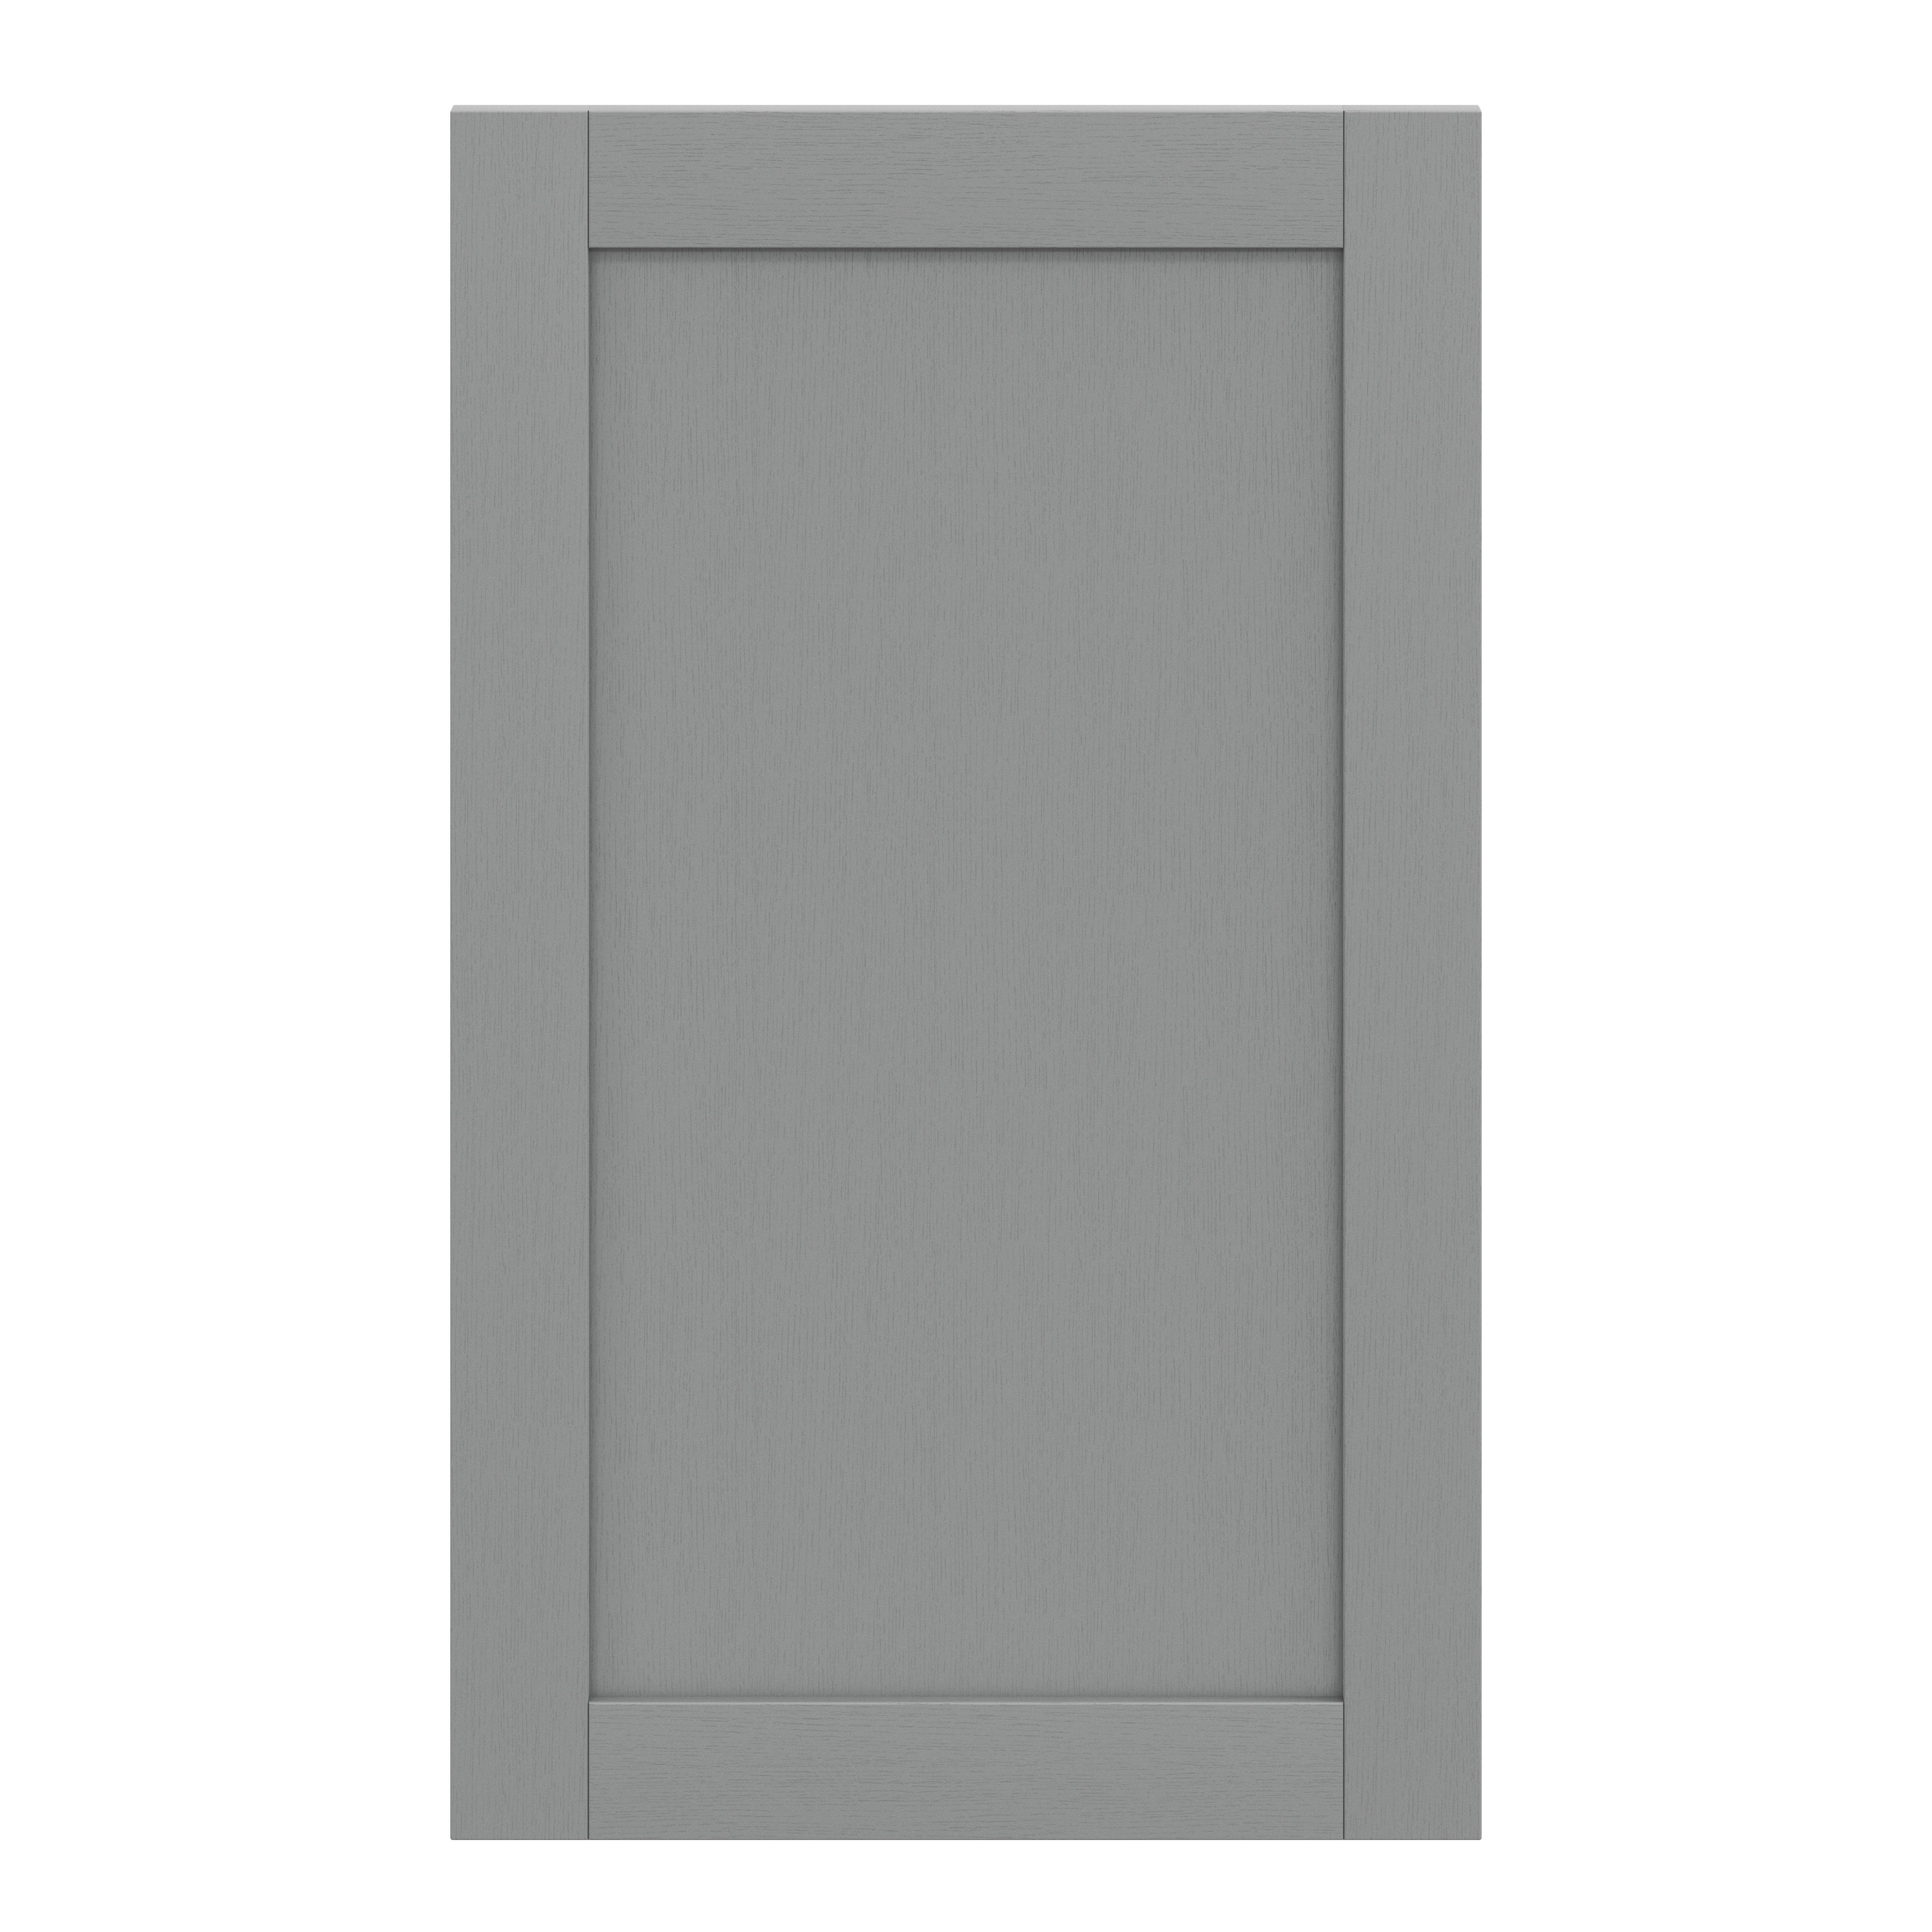 GoodHome Alpinia Matt Slate Grey Painted Wood Effect Shaker 50:50 Larder Cabinet door (W)600mm (H)1001mm (T)18mm